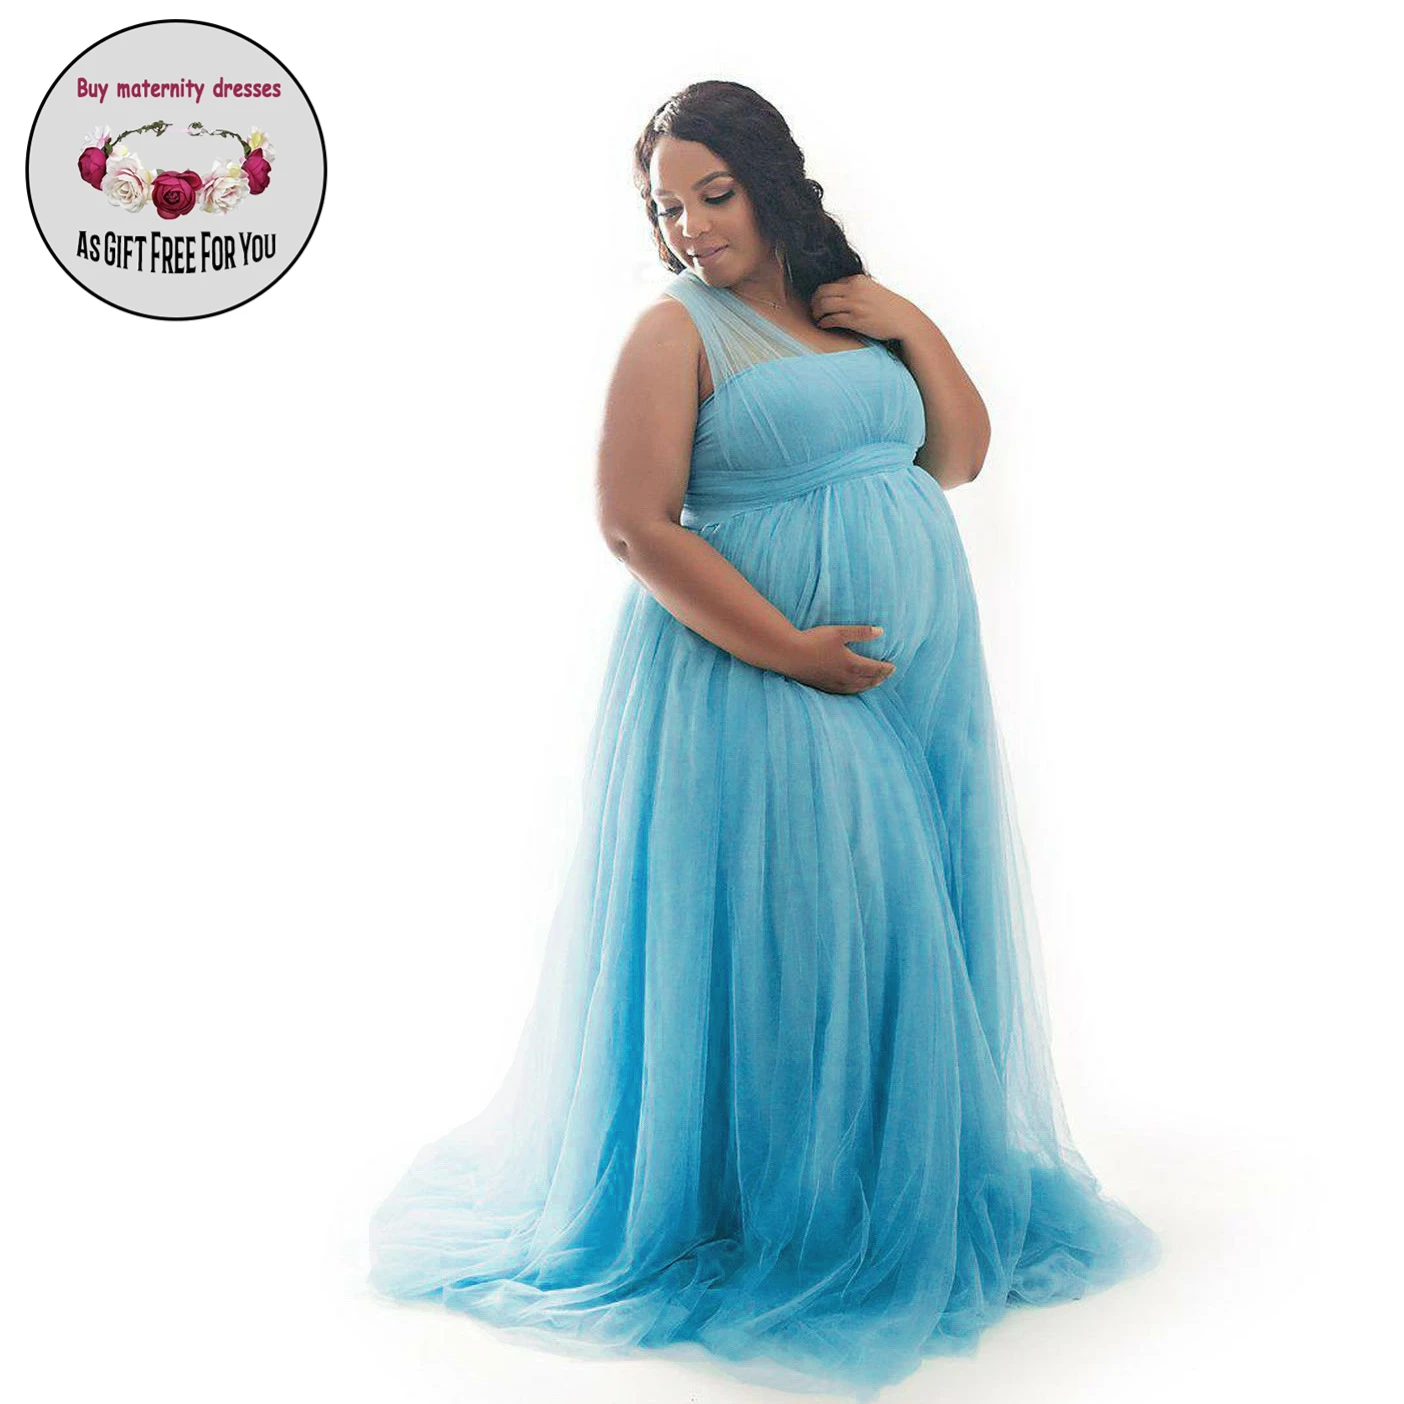 Women Strapless Pregnant Photography Dress Tulle Mercerized Cotton Long Maternity Dresses for Photo Shoot